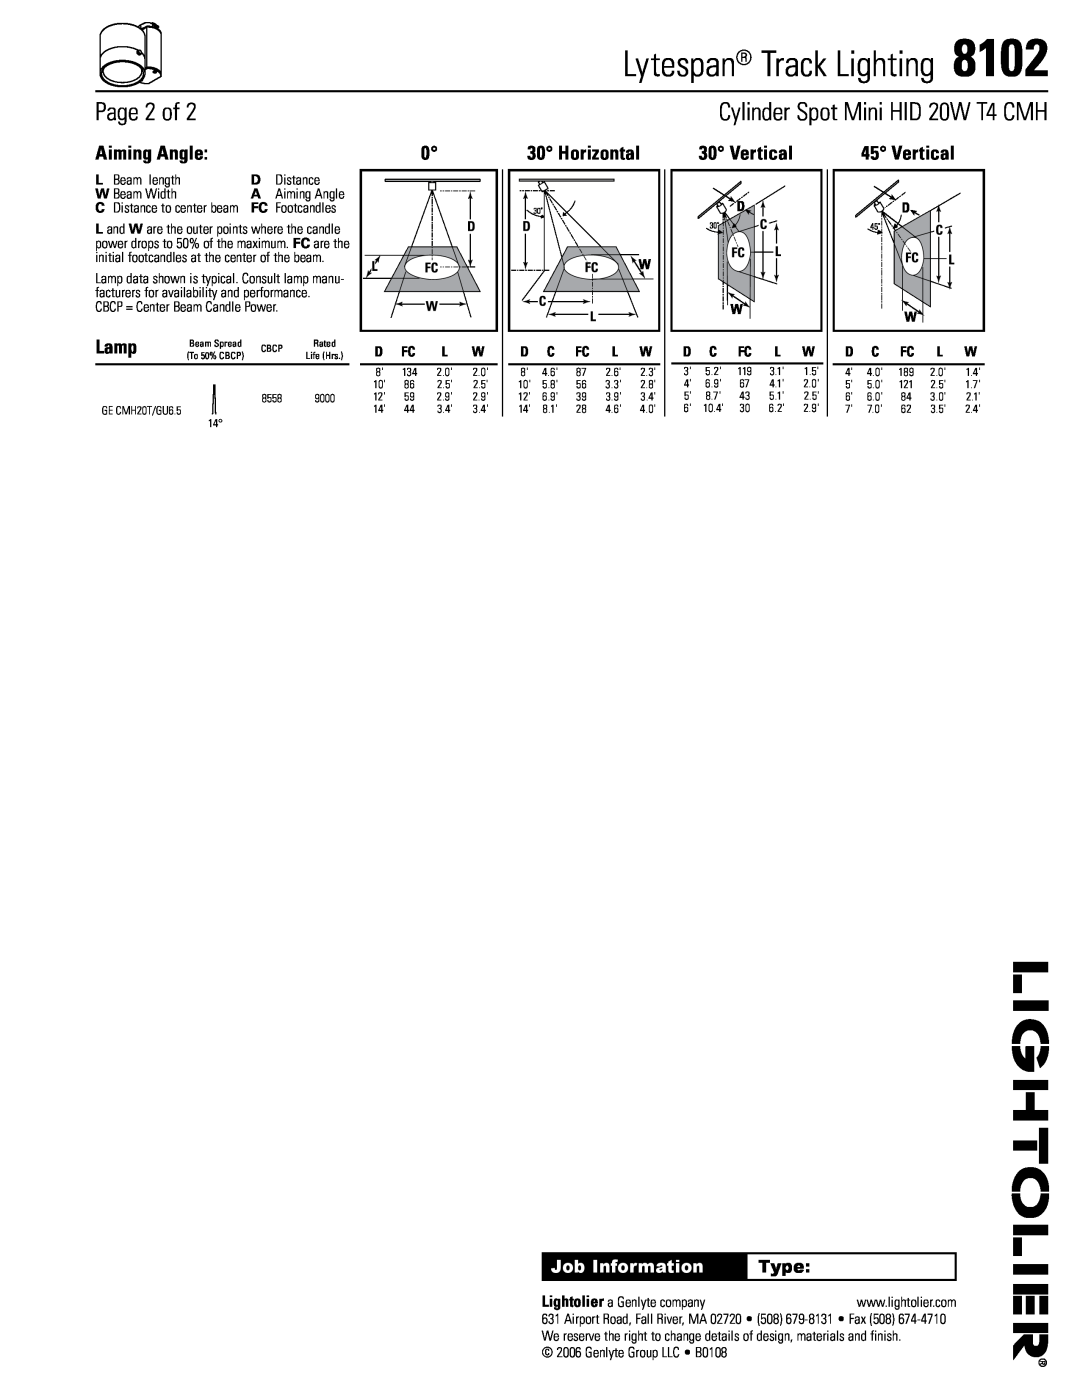 Lightolier 8102 Aiming Angle, Horizontal, Vertical, Lytespan Track Lighting, Page of, Cylinder Spot Mini HID 20W T4 CMH 